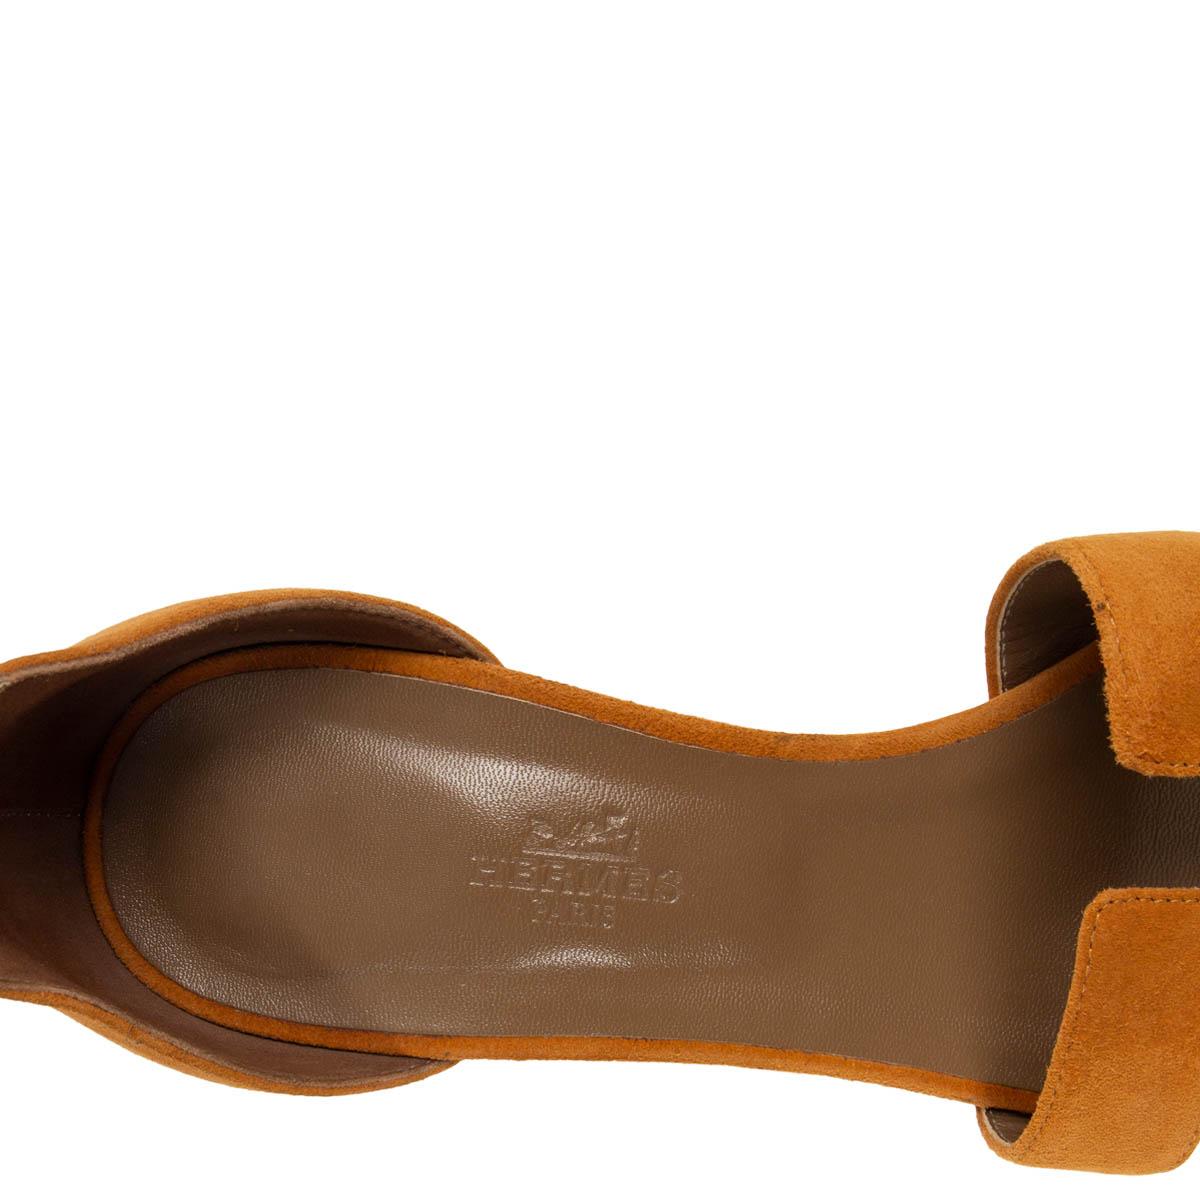 Brown HERMES ochre suede LEGEND ANKLE STRAP WEDGE Sandals Shoes 39